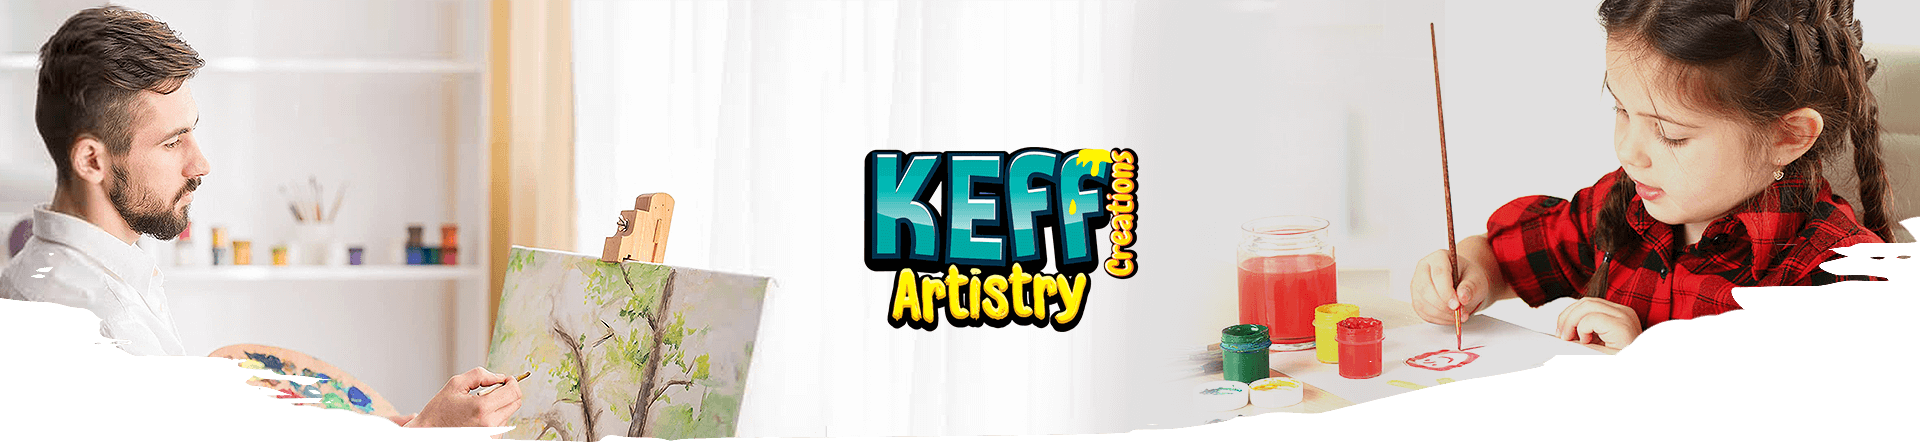 Artistry – KEFF Creations